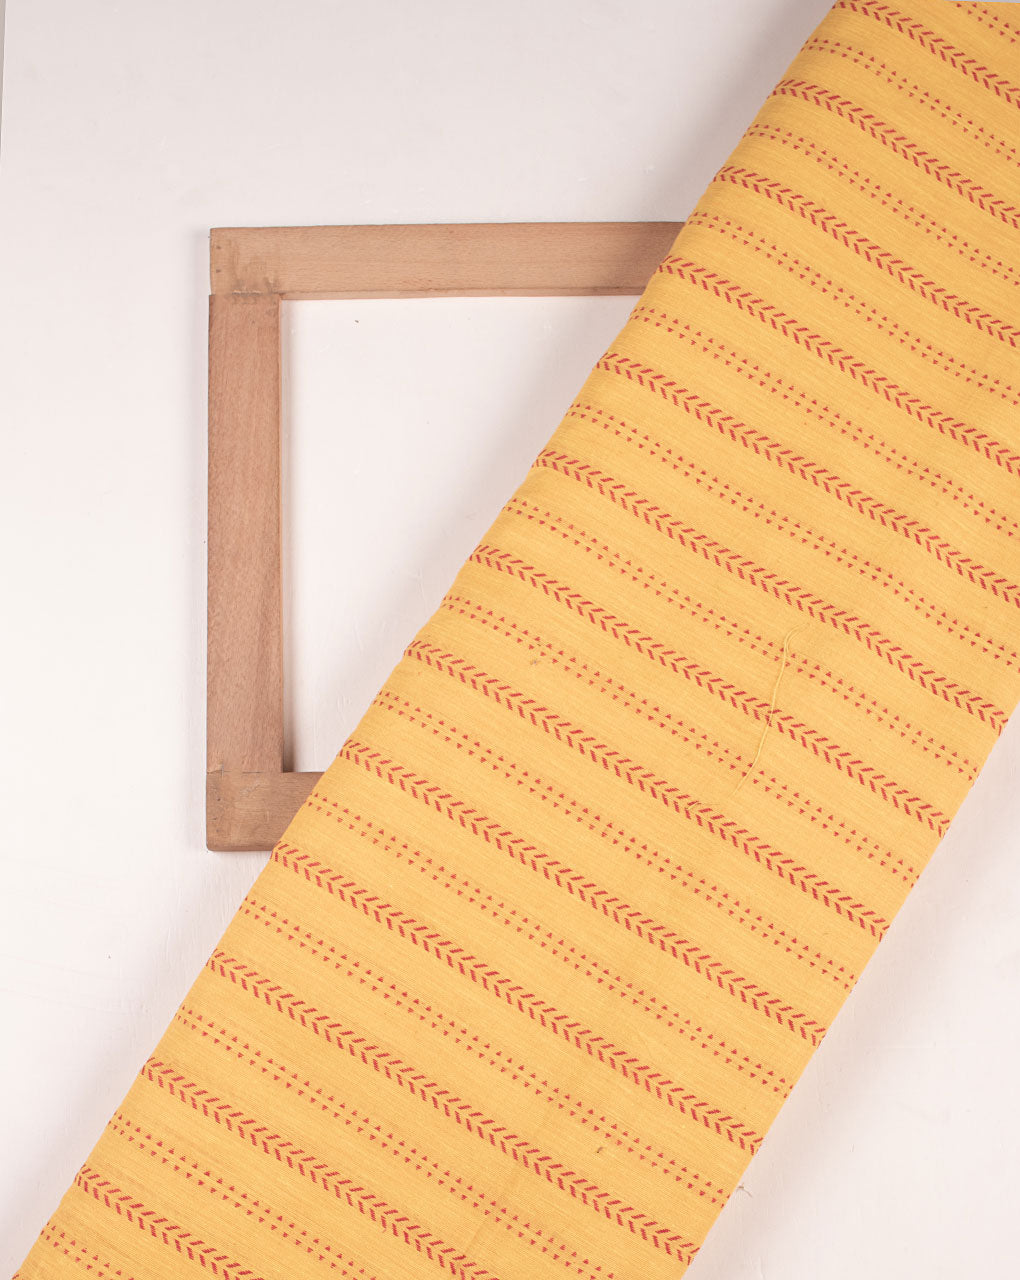 Stripes Woven Jacquard Loom Textured Cotton Fabric - Fabriclore.com